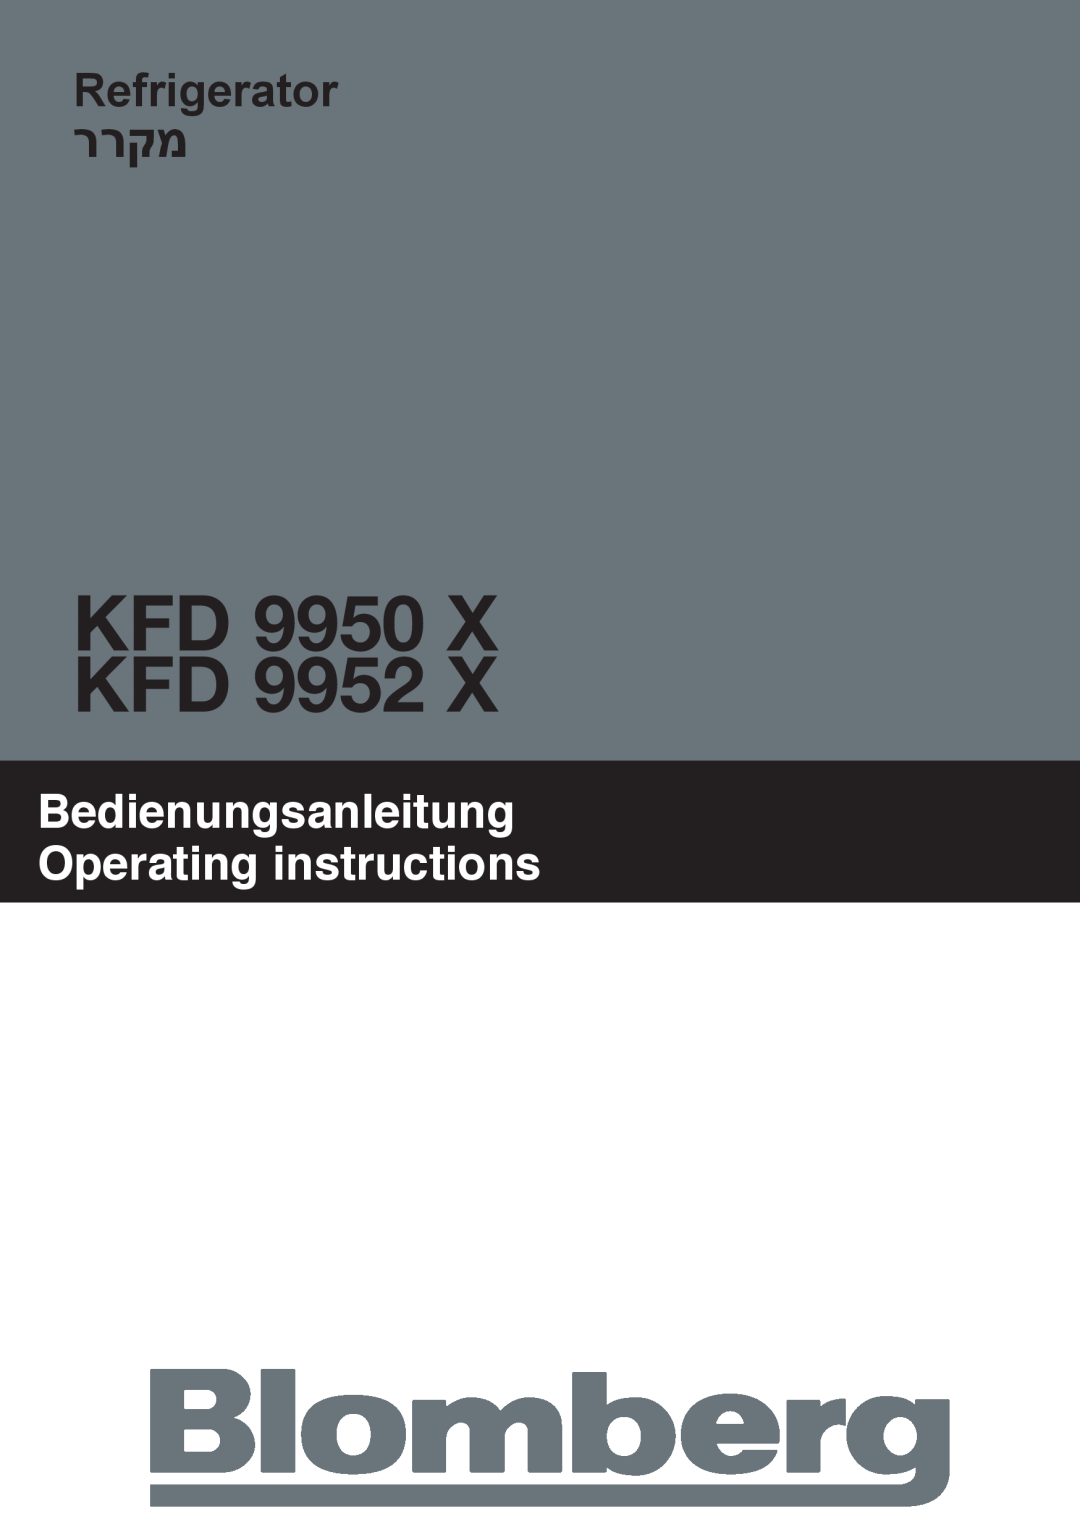 Blomberg KFD 9952 X manual KFD 9950 X KFD, Refrigerator ררקמ, Bedienungsanleitung Operating instructions 